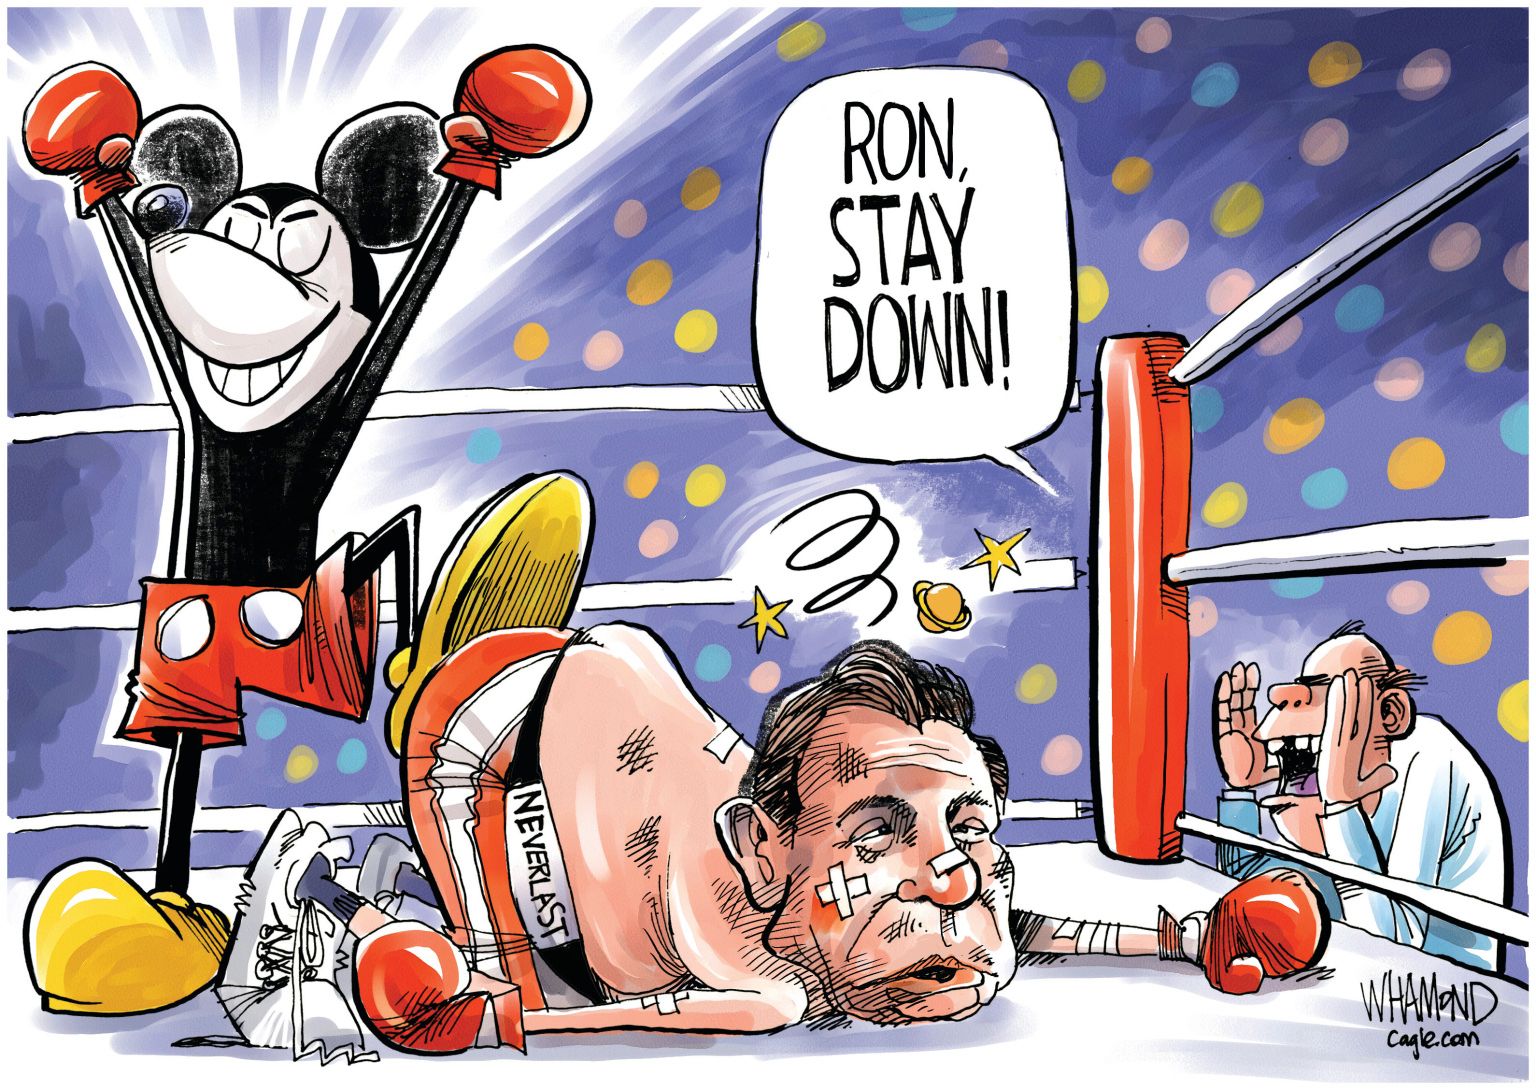 newsjustin.press - editorial political cartoons - Mickey Mouse sues Goofy